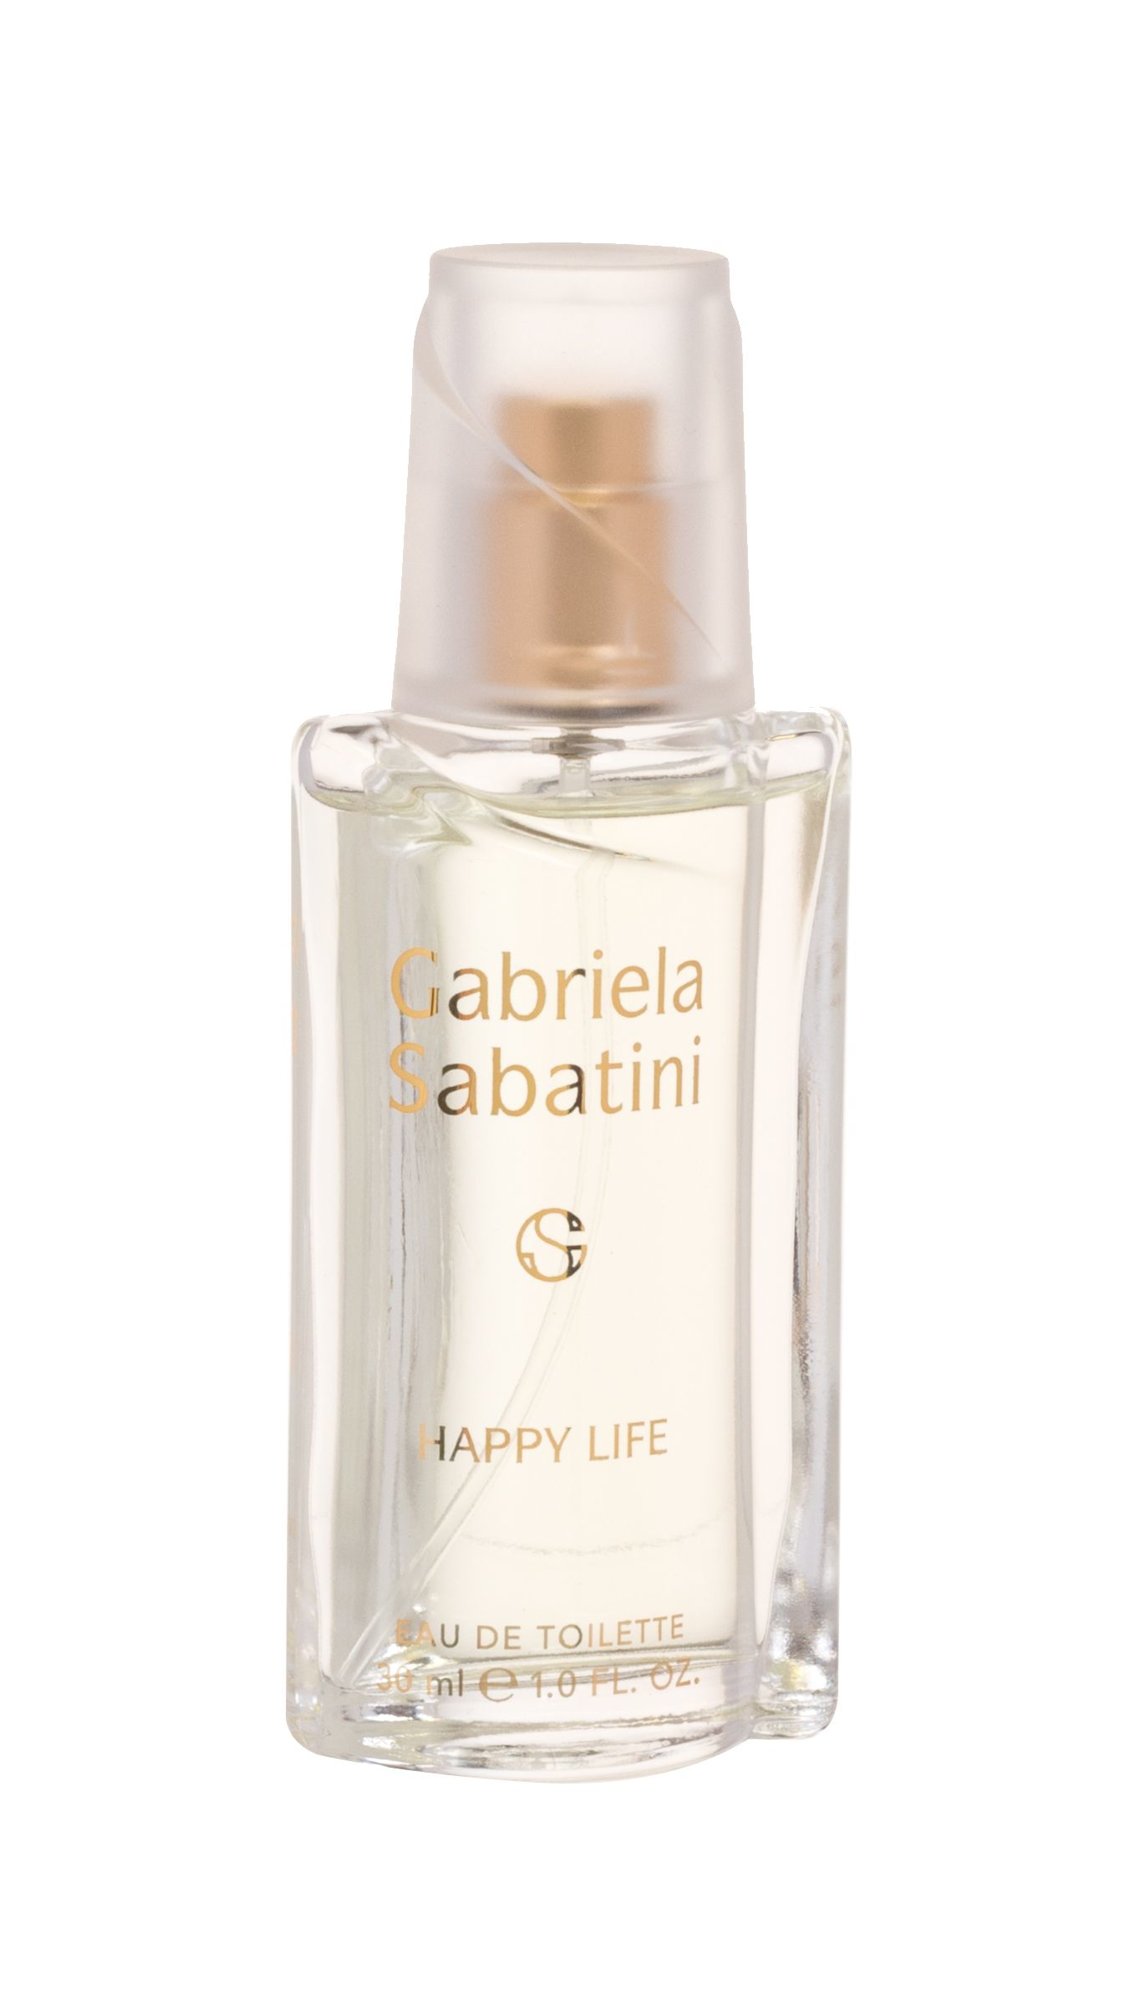 Gabriela Sabatini Happy Life